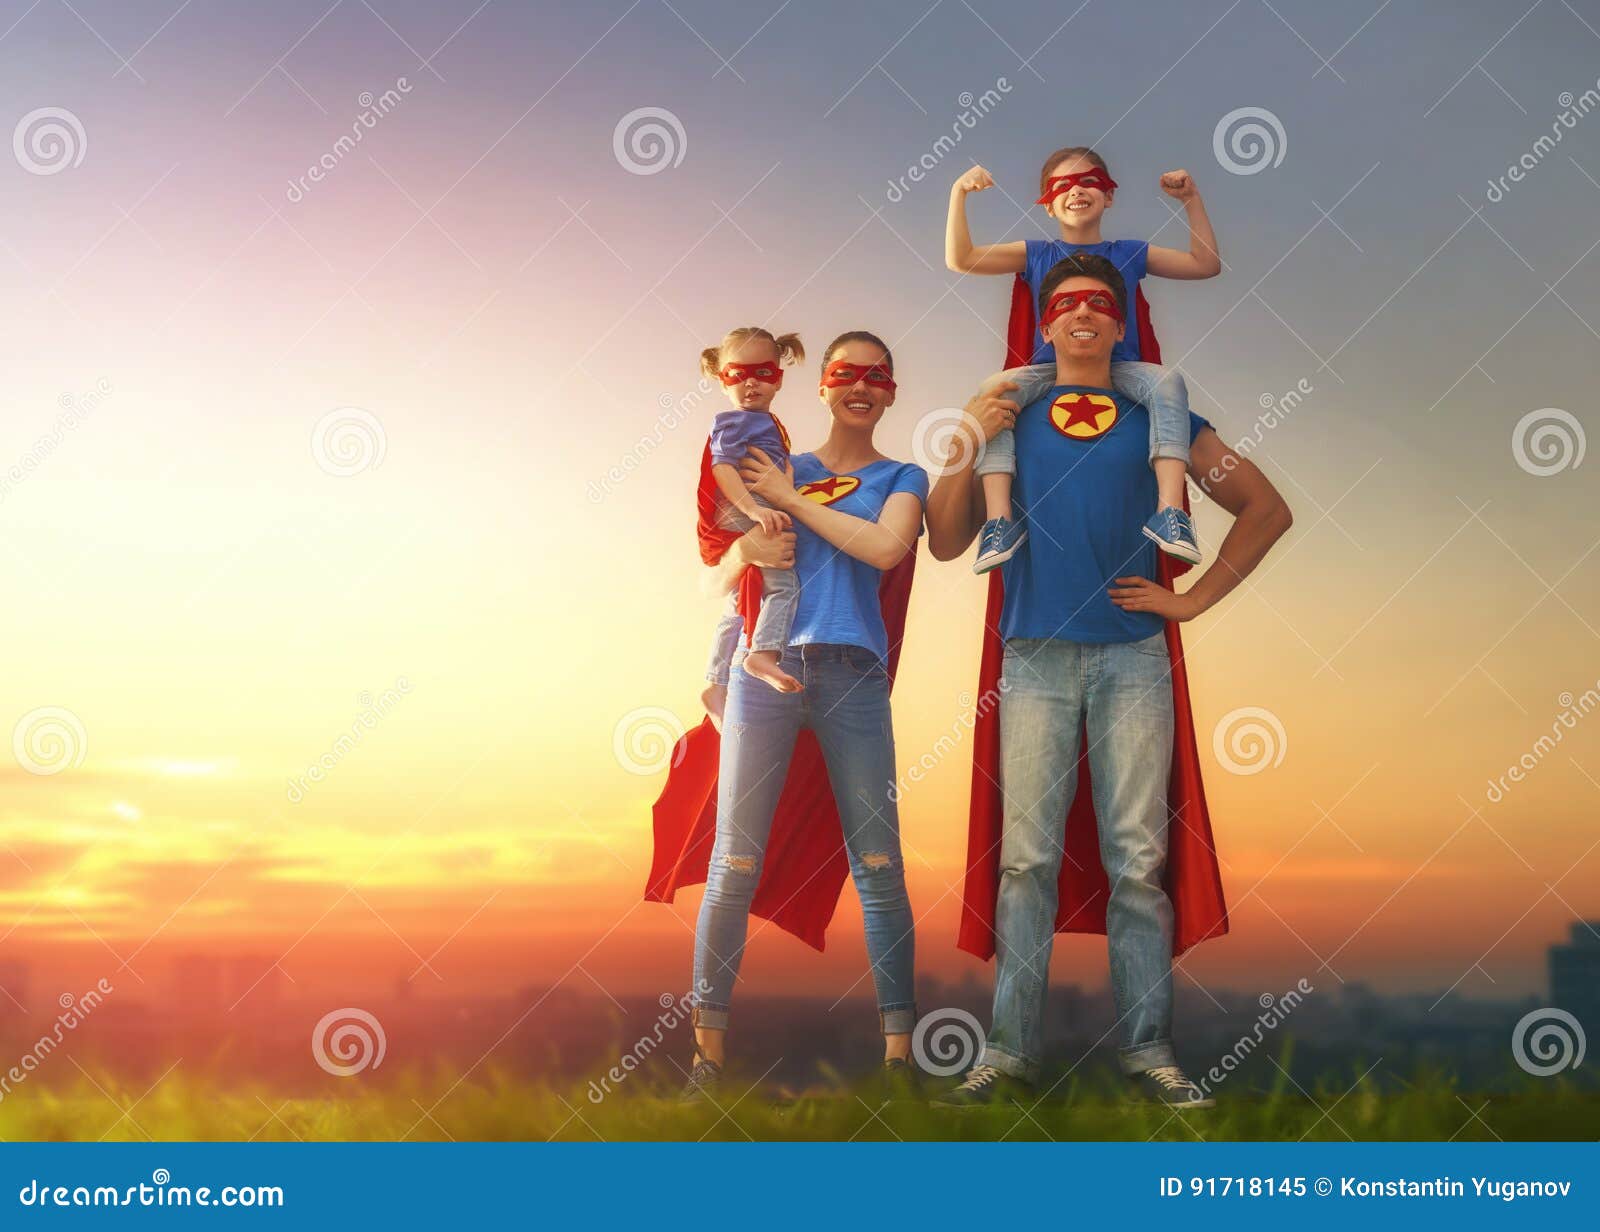 concept of super family.